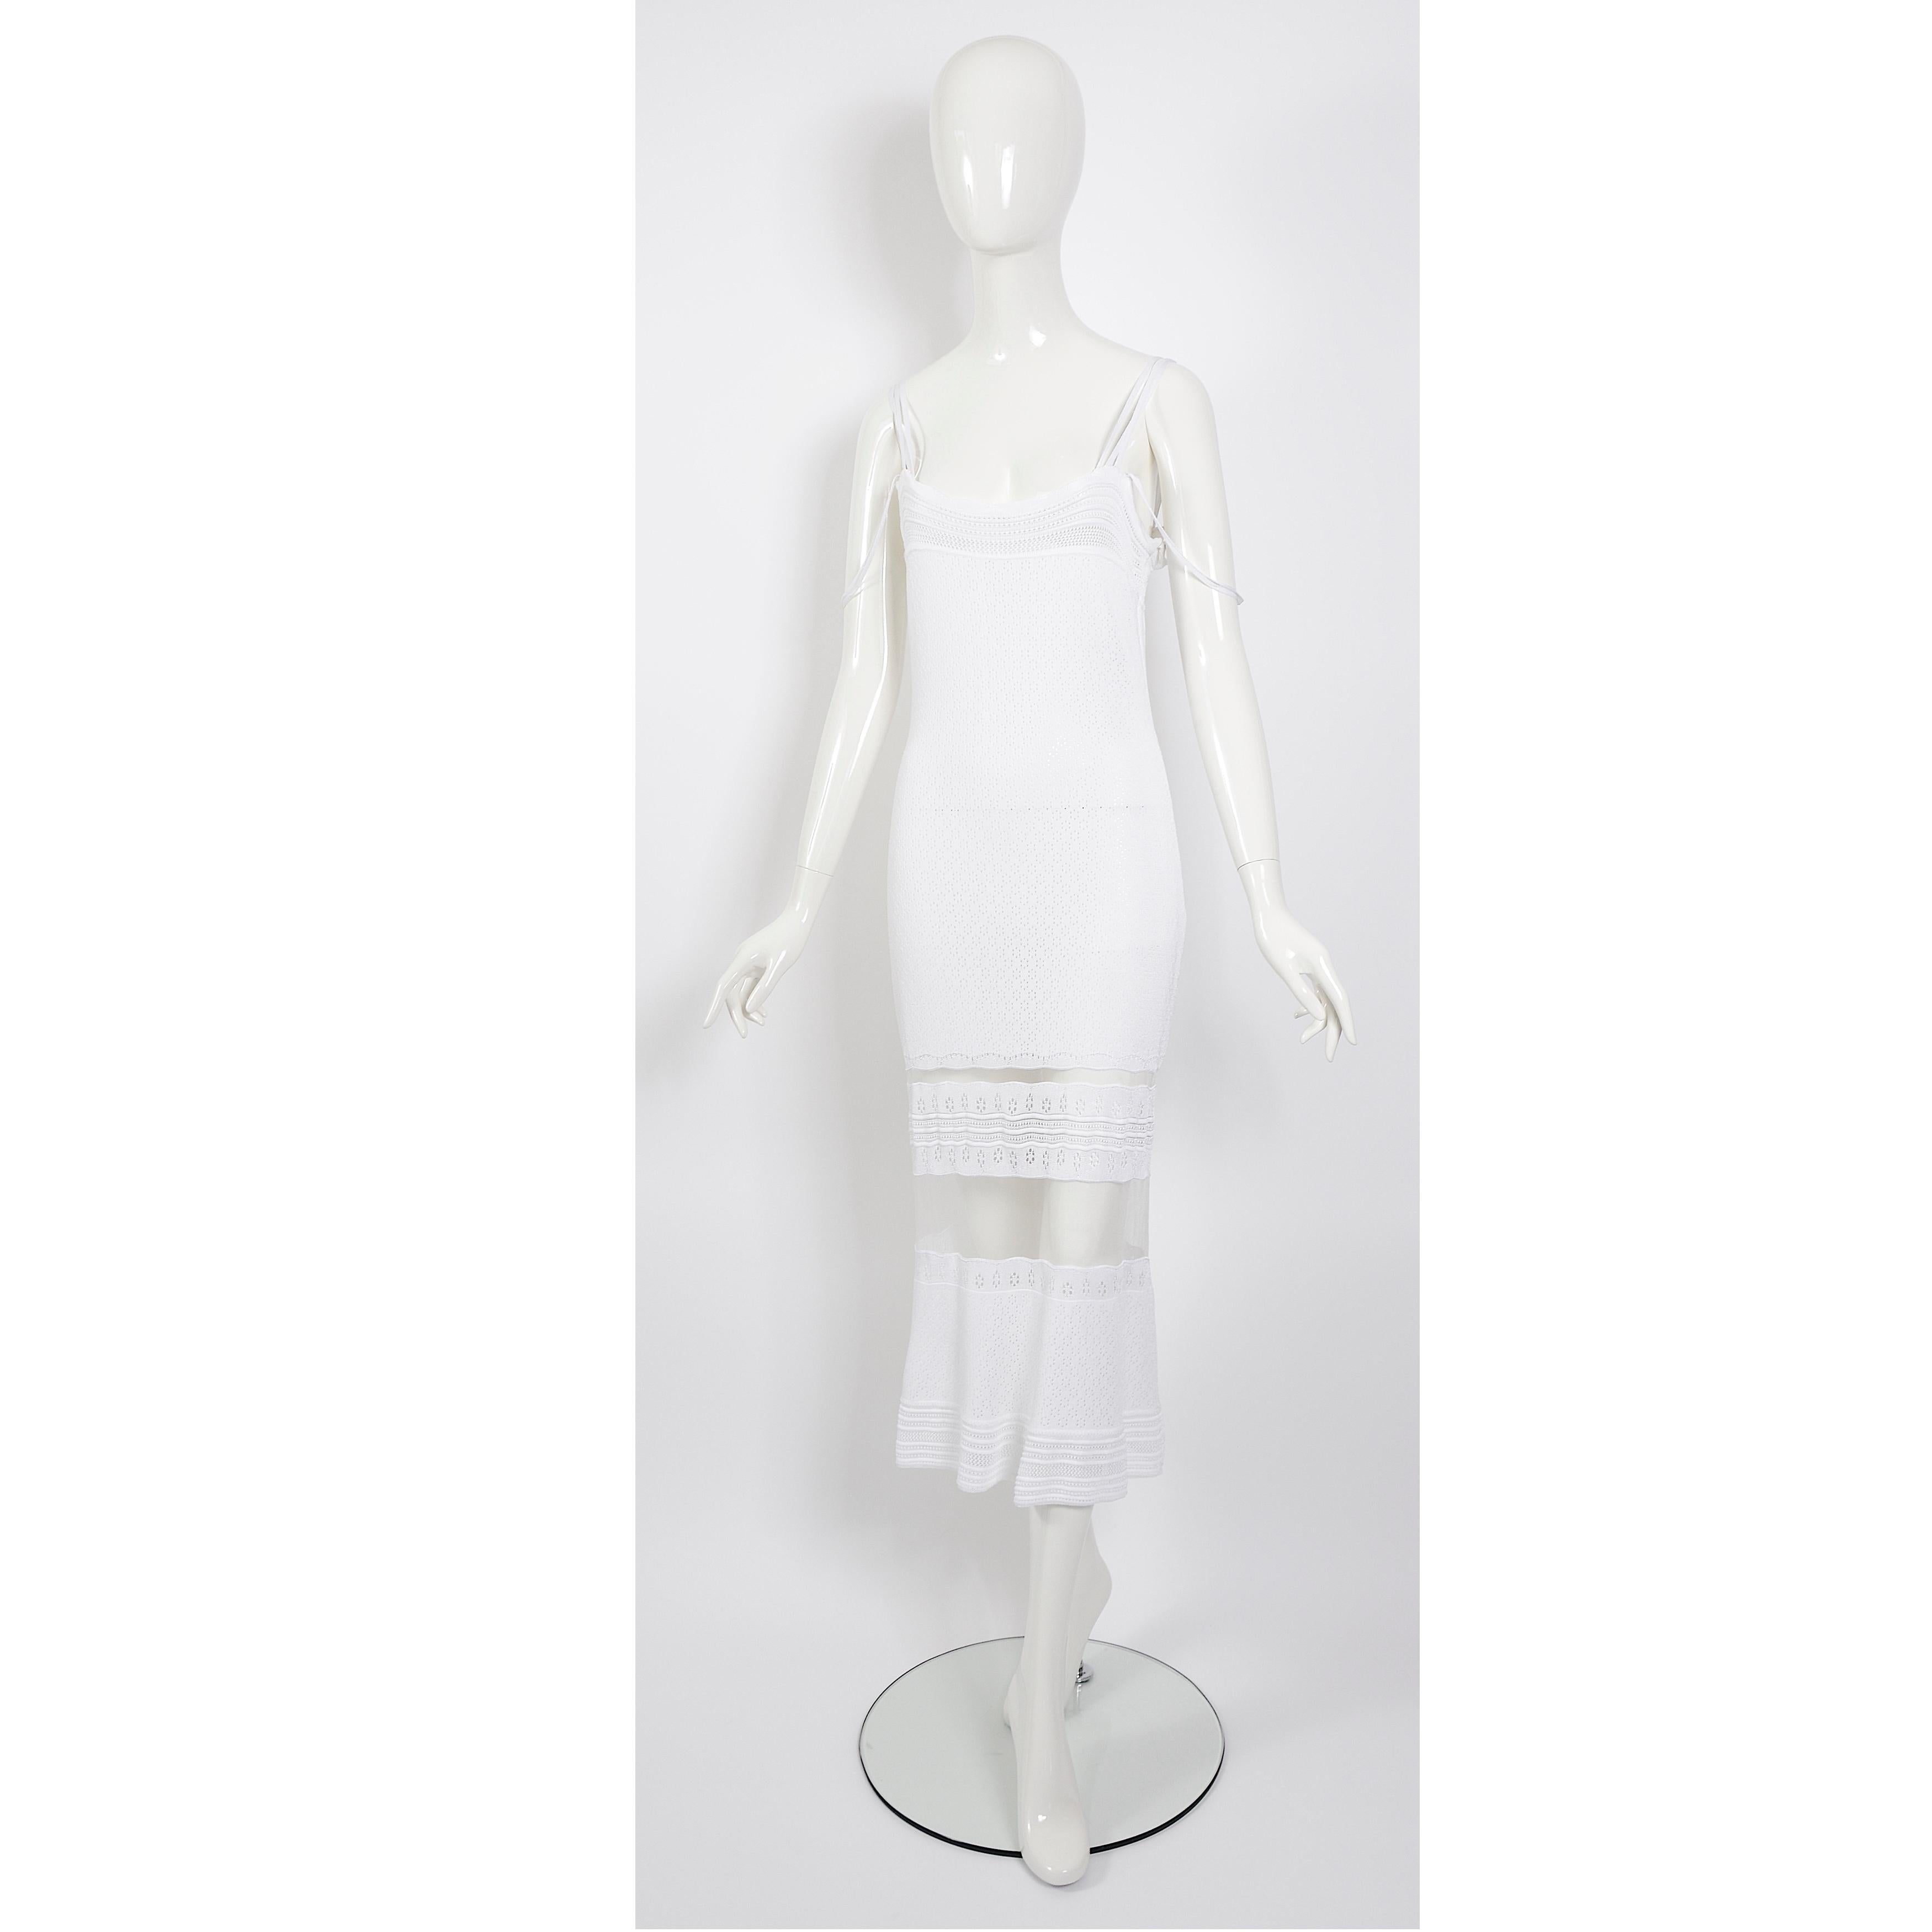  John Galliano S/S 1998 vintage white knit & mesh wedding or evening dress  7